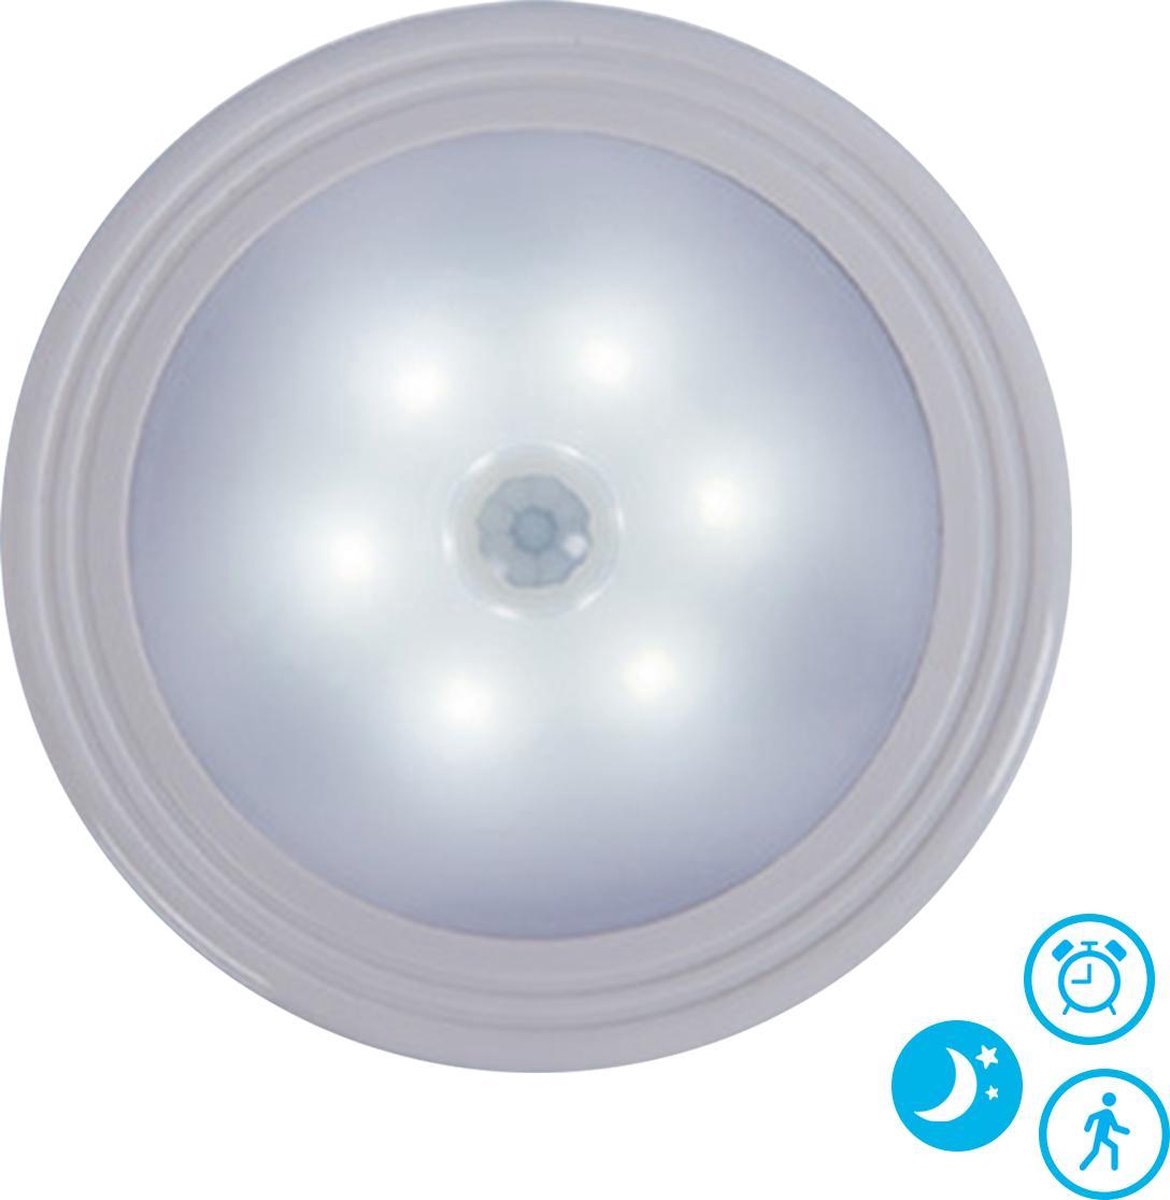 Peerlights Draadloze Nachtlamp Magneet - Wandlamp Binnen - Bewegingssensor - LED - Wit licht